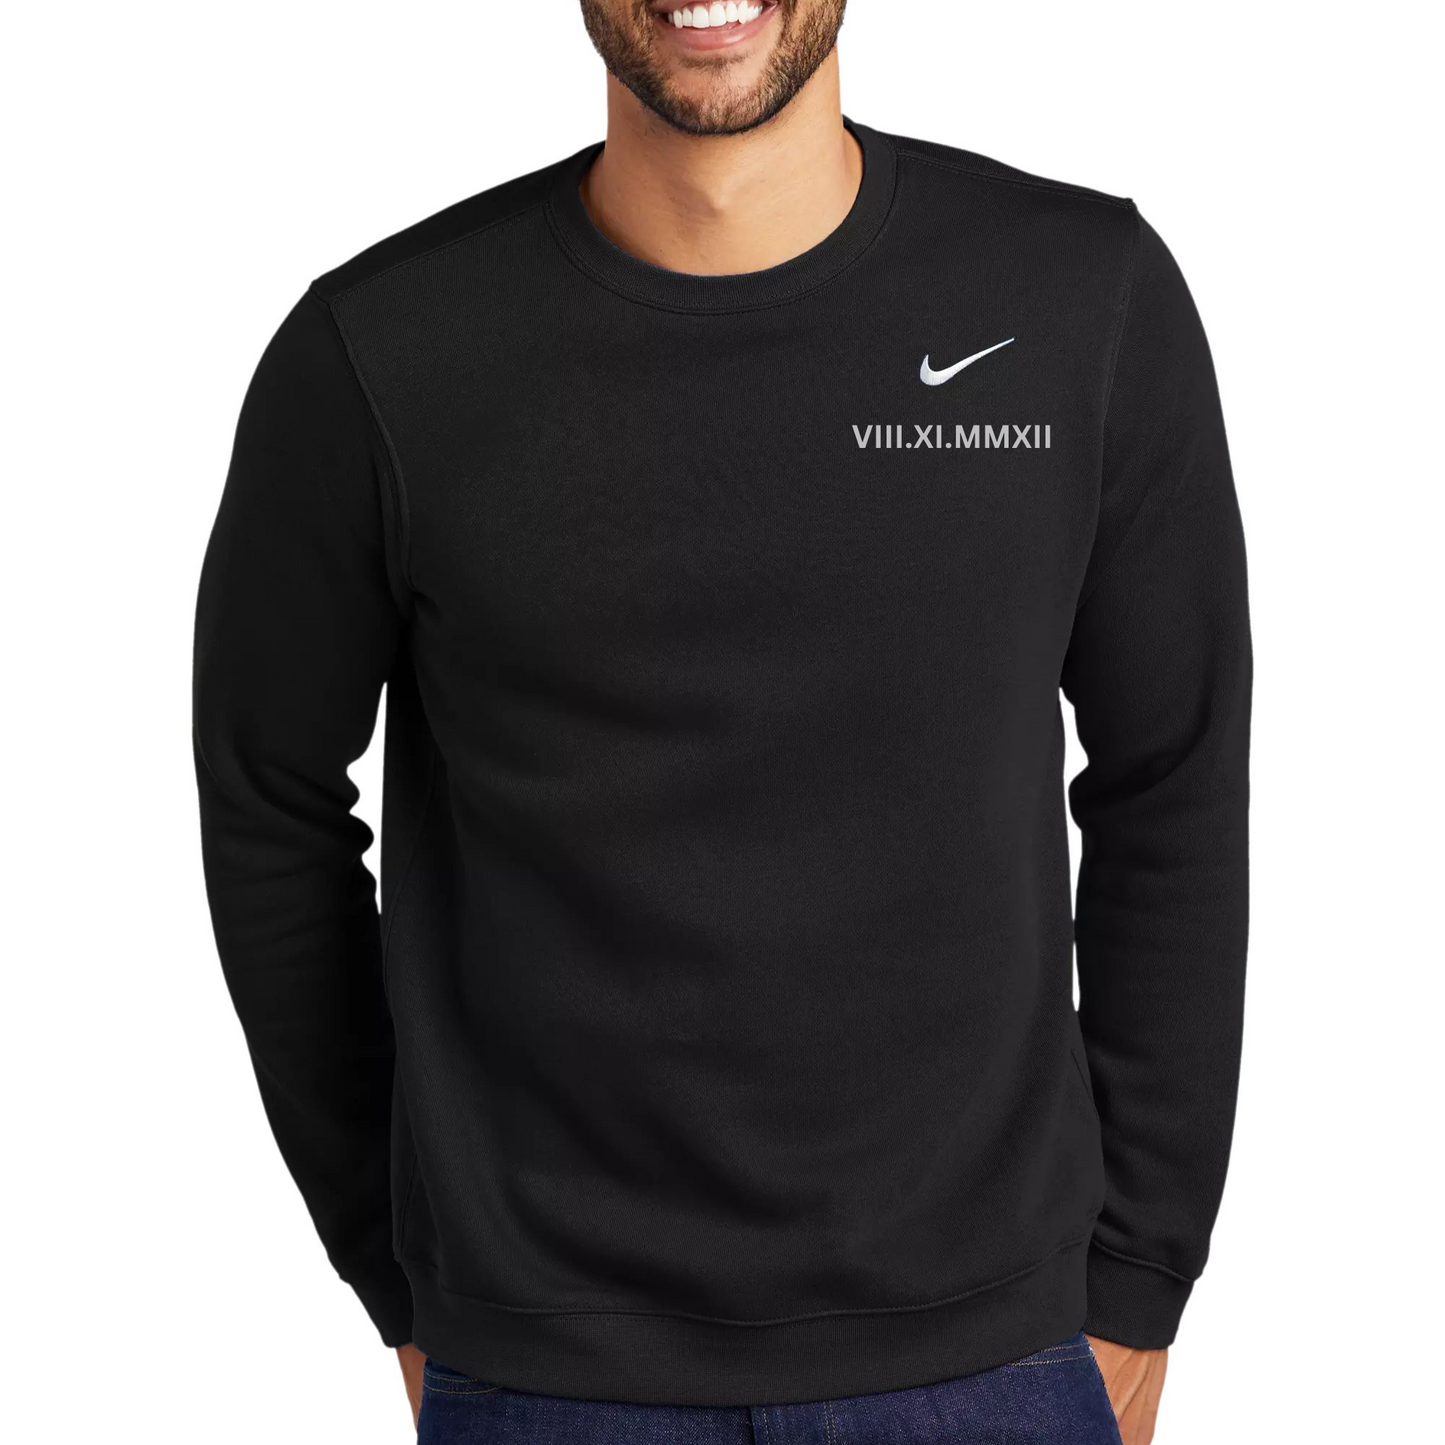 Nike Embroidered crewneck sweatshirt with anniversary date in roman numerals, Anniversary gift, birthday gift,